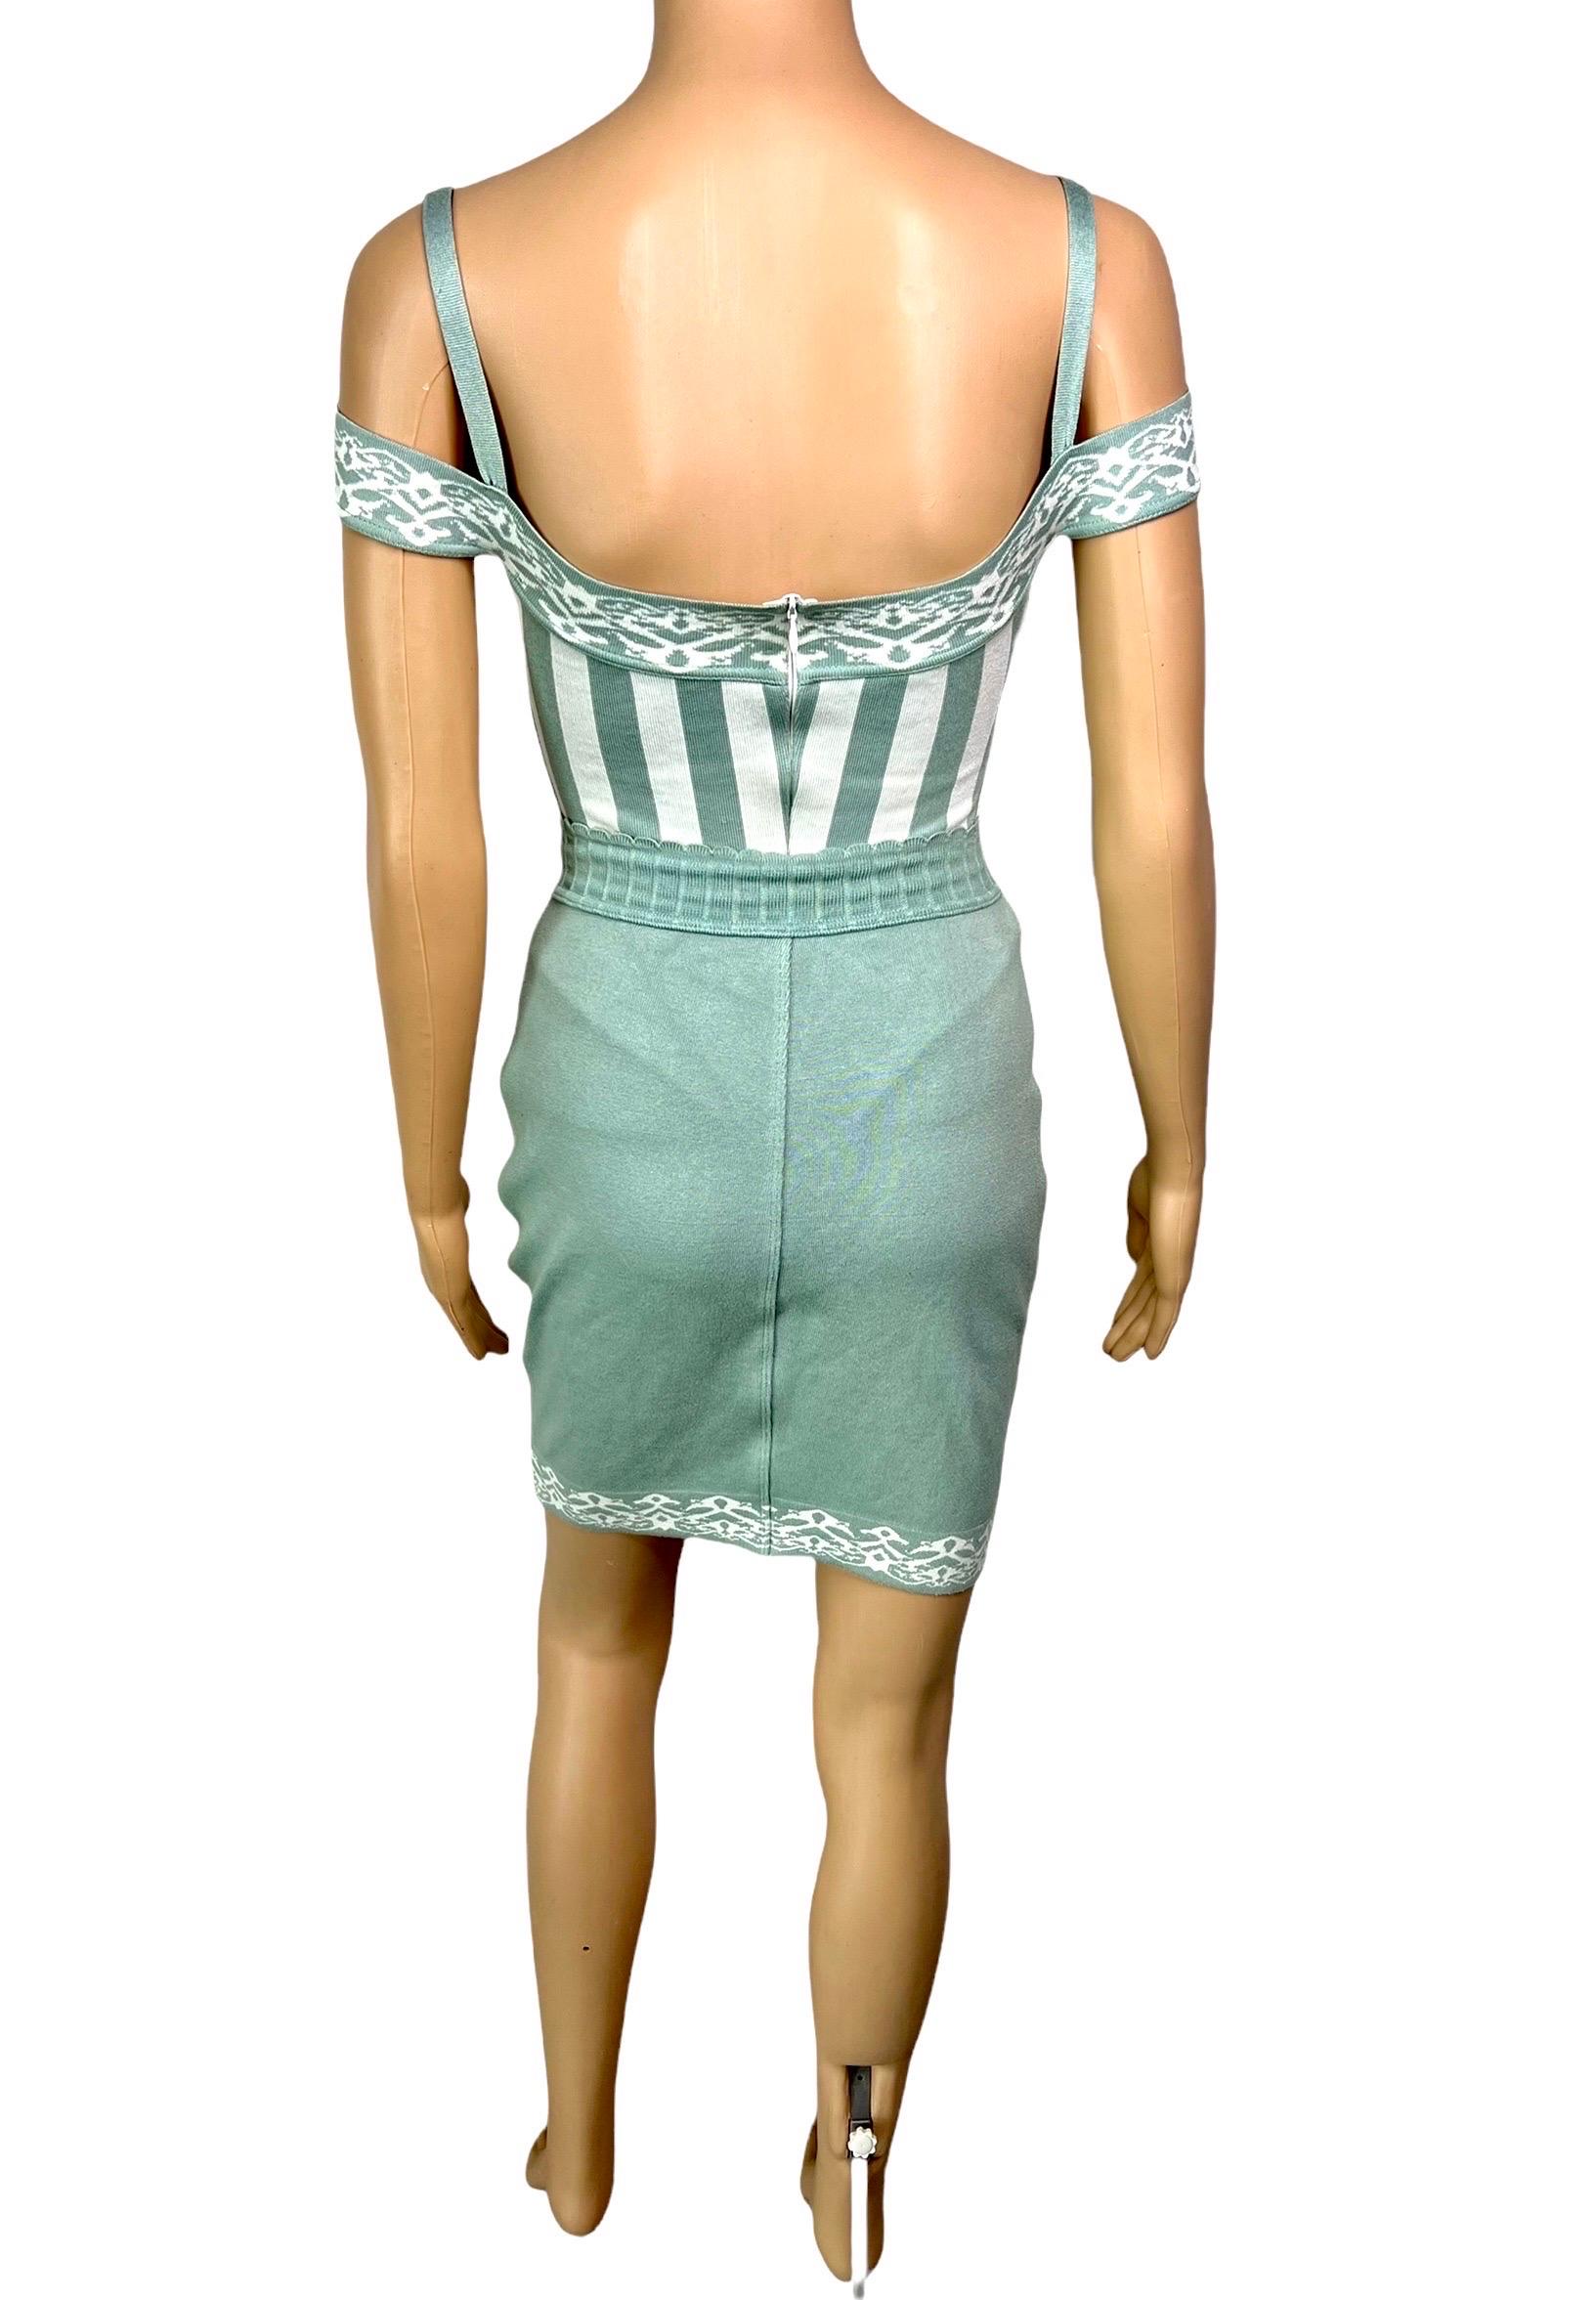 Azzedine Alaia S/S 1992 Vintage Striped Bodysuit Top and Mini Skirt 2 Piece Set For Sale 4